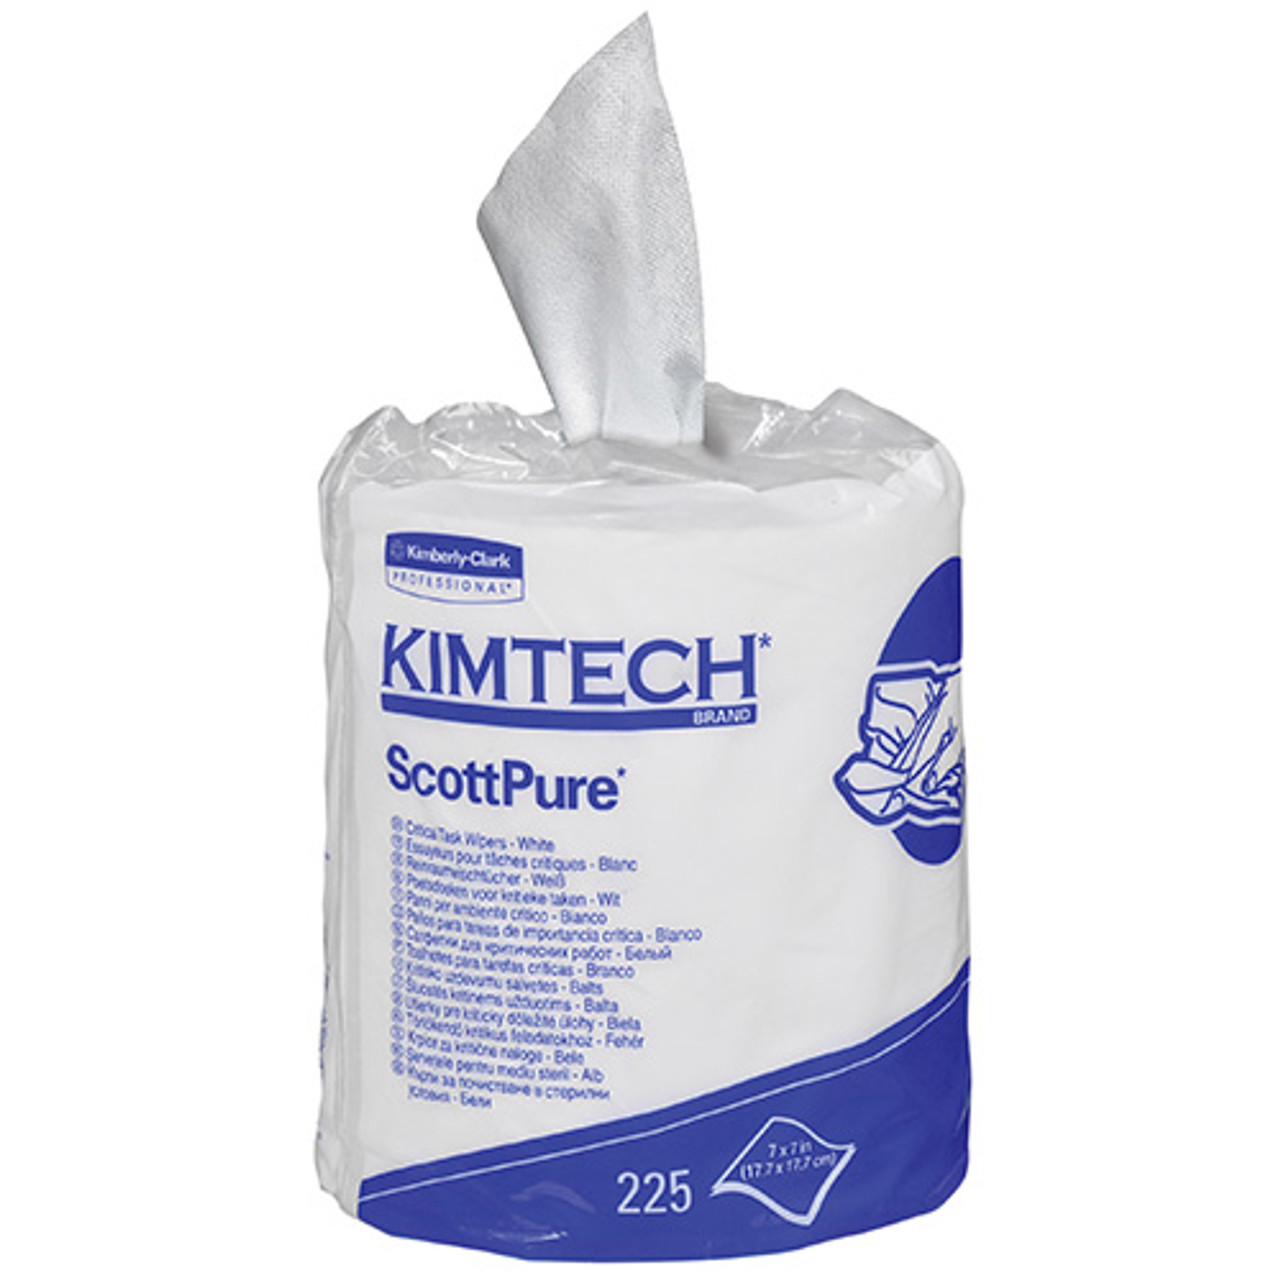 KIMTECH® Mold Polish Wipes